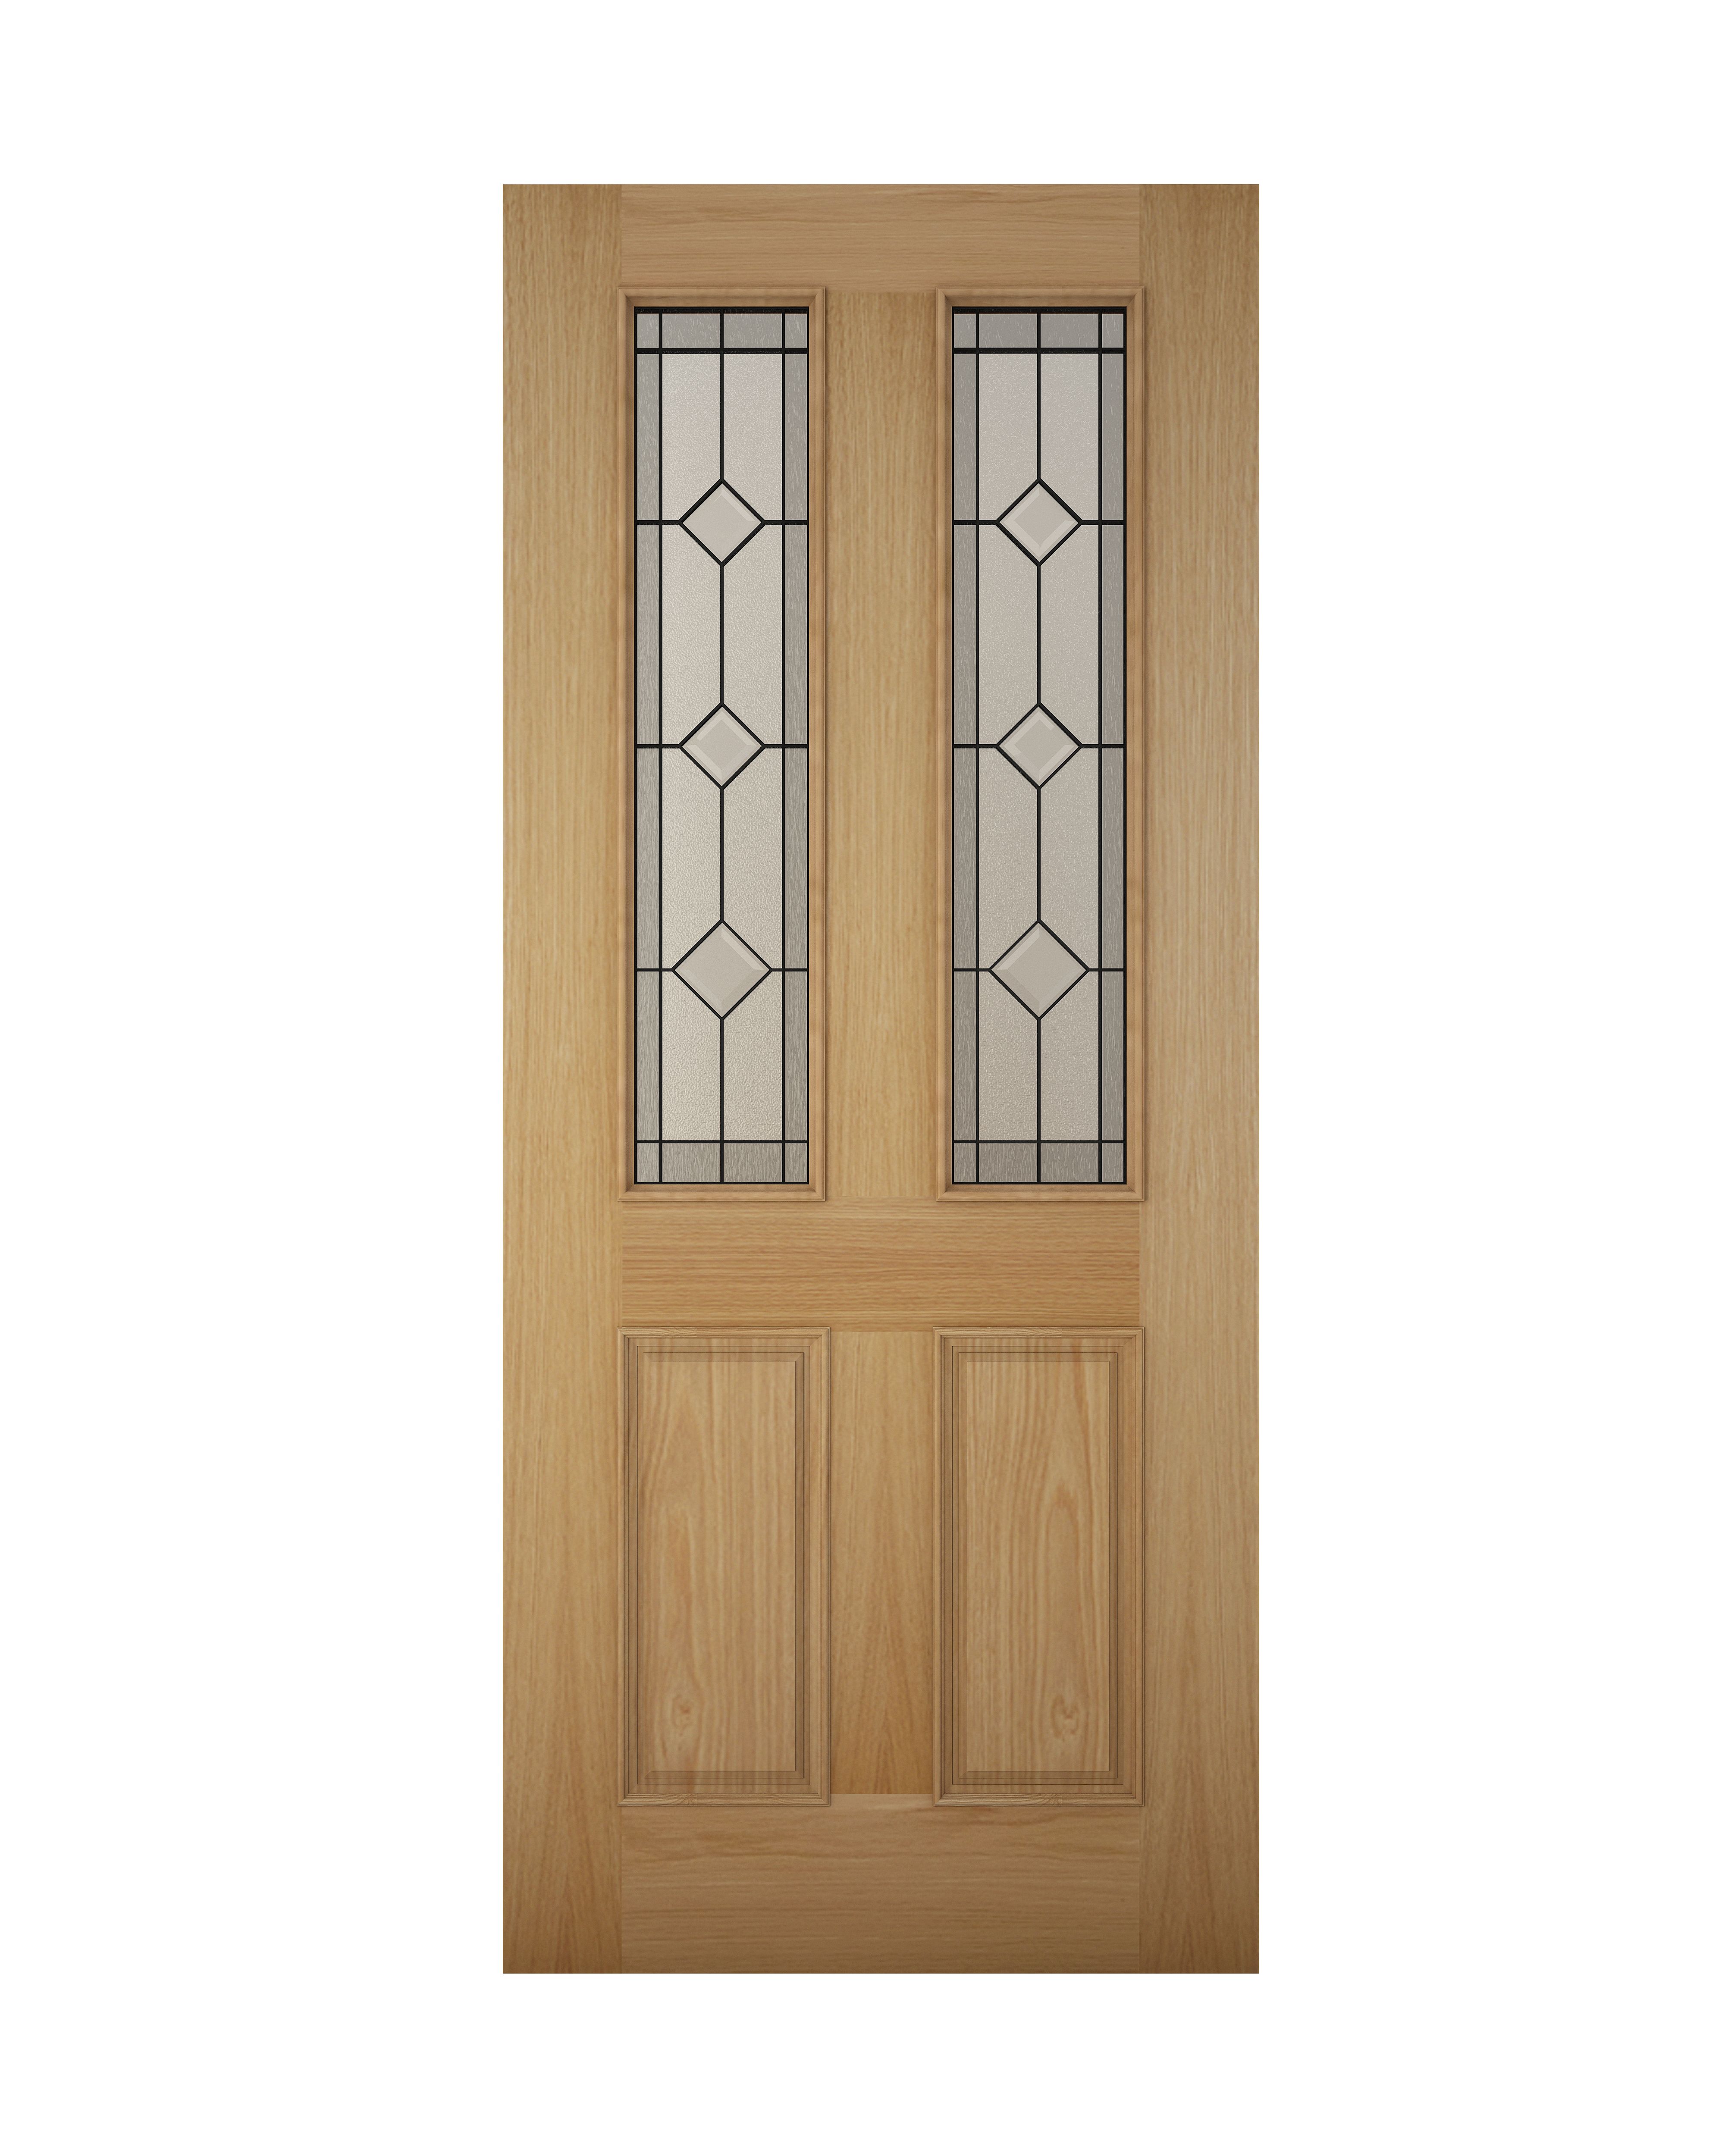 Geom 4 panel Diamond bevel Leaded Glazed Wooden White oak veneer External Panel Front door, (H)1981mm (W)838mm